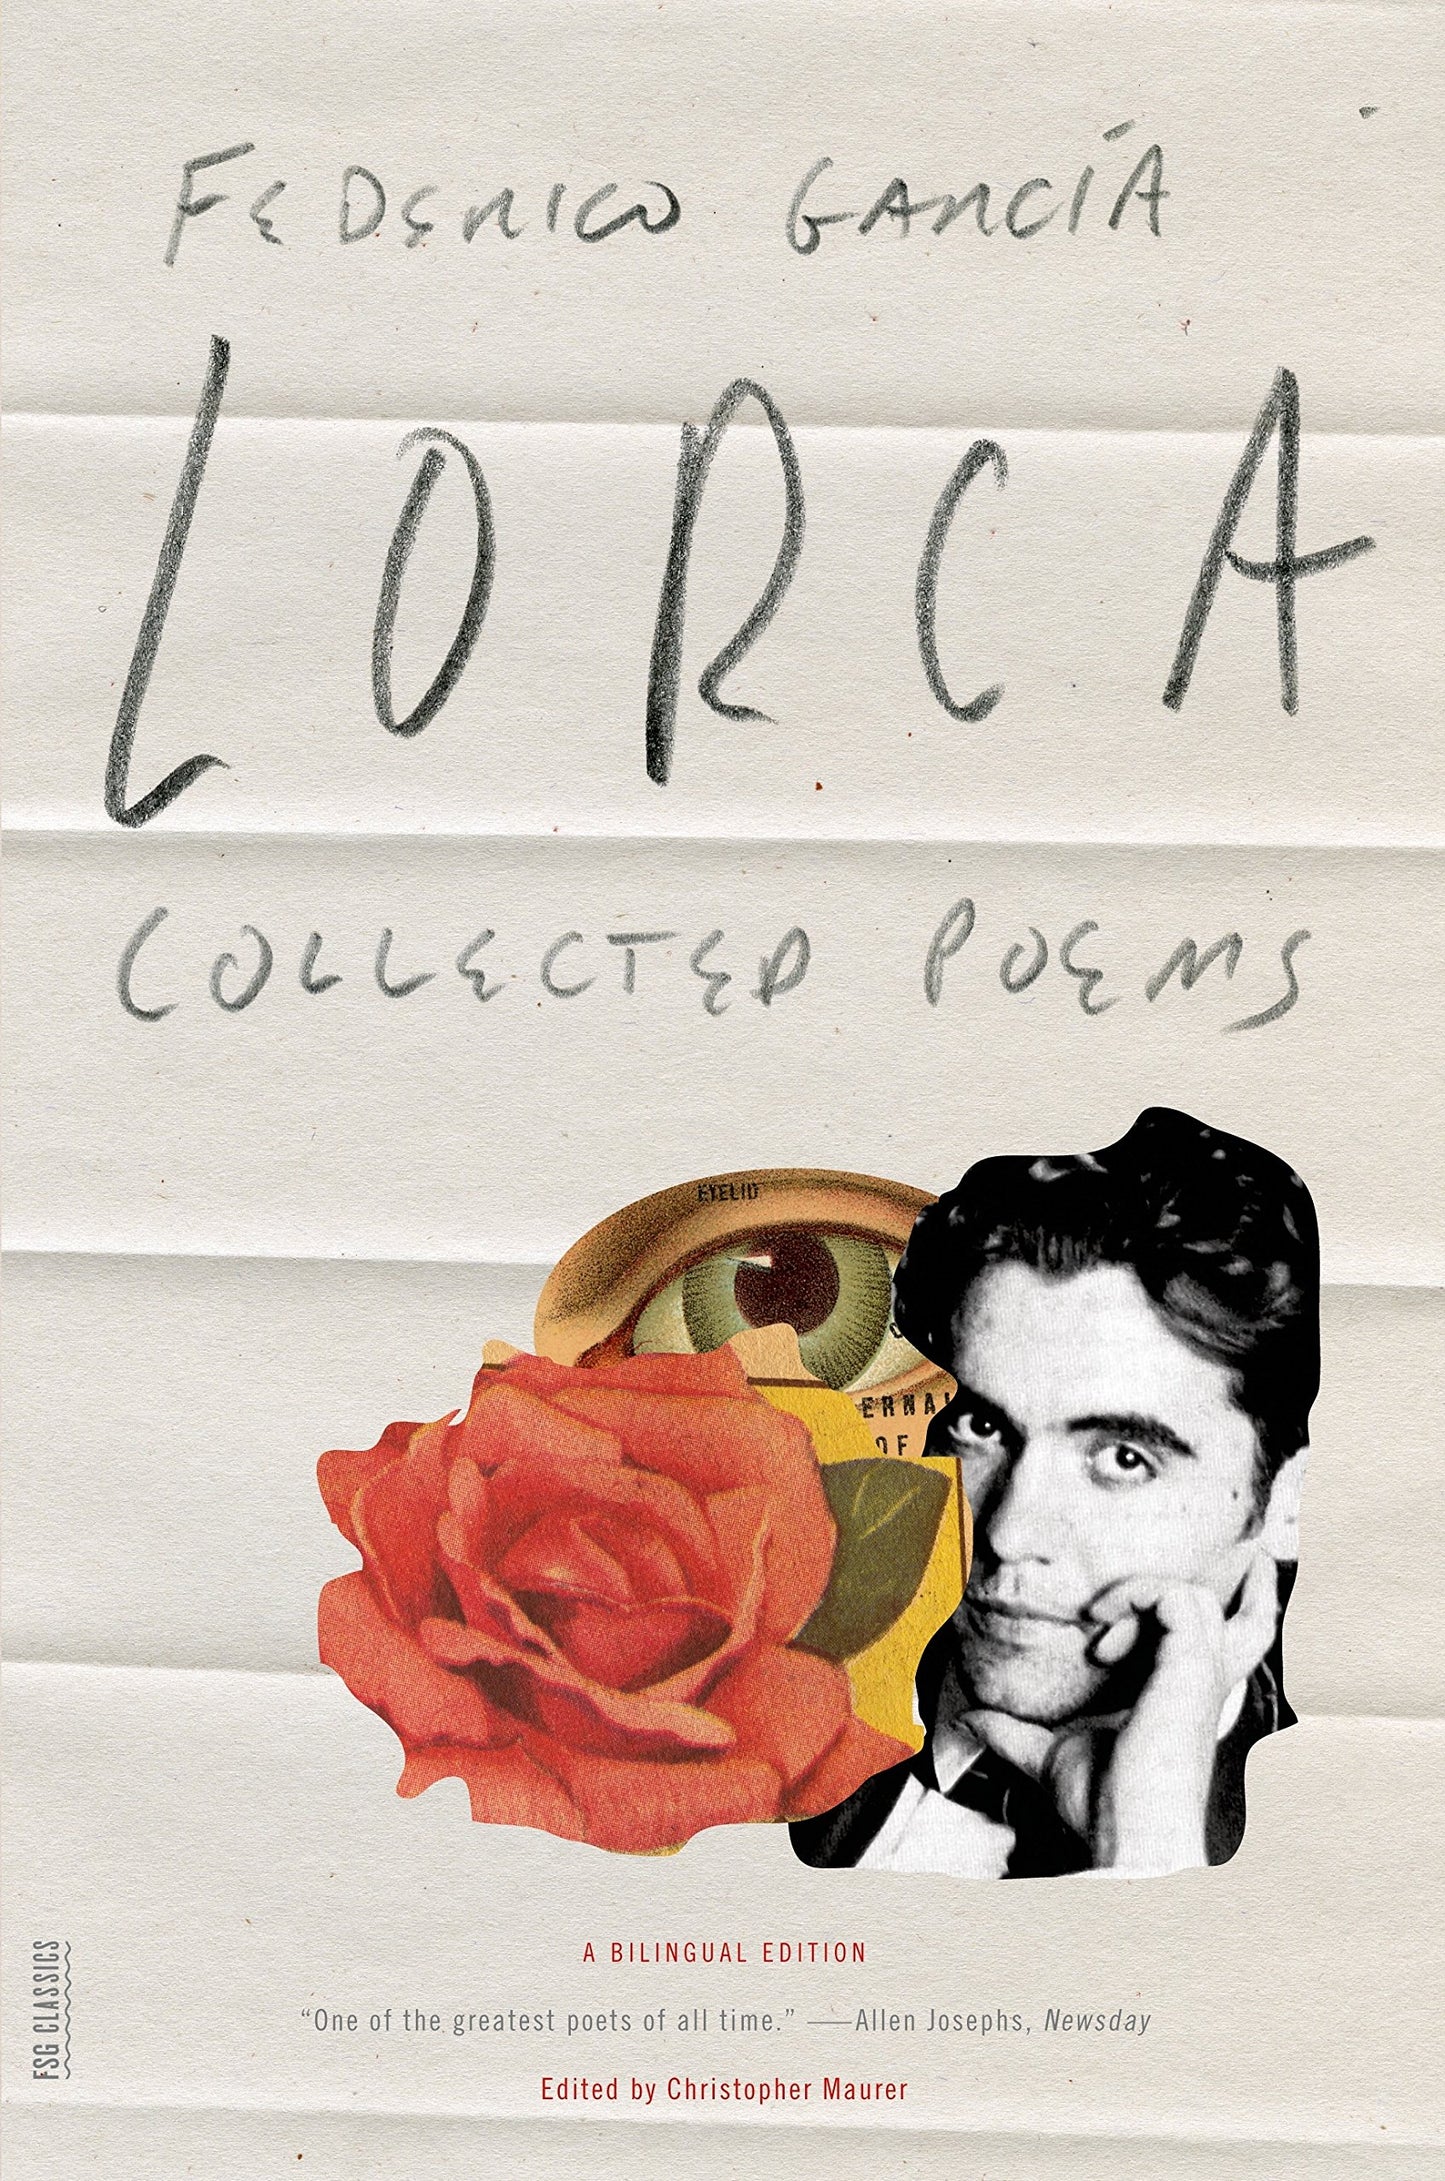 Collected Poems, by Federico García Lorca